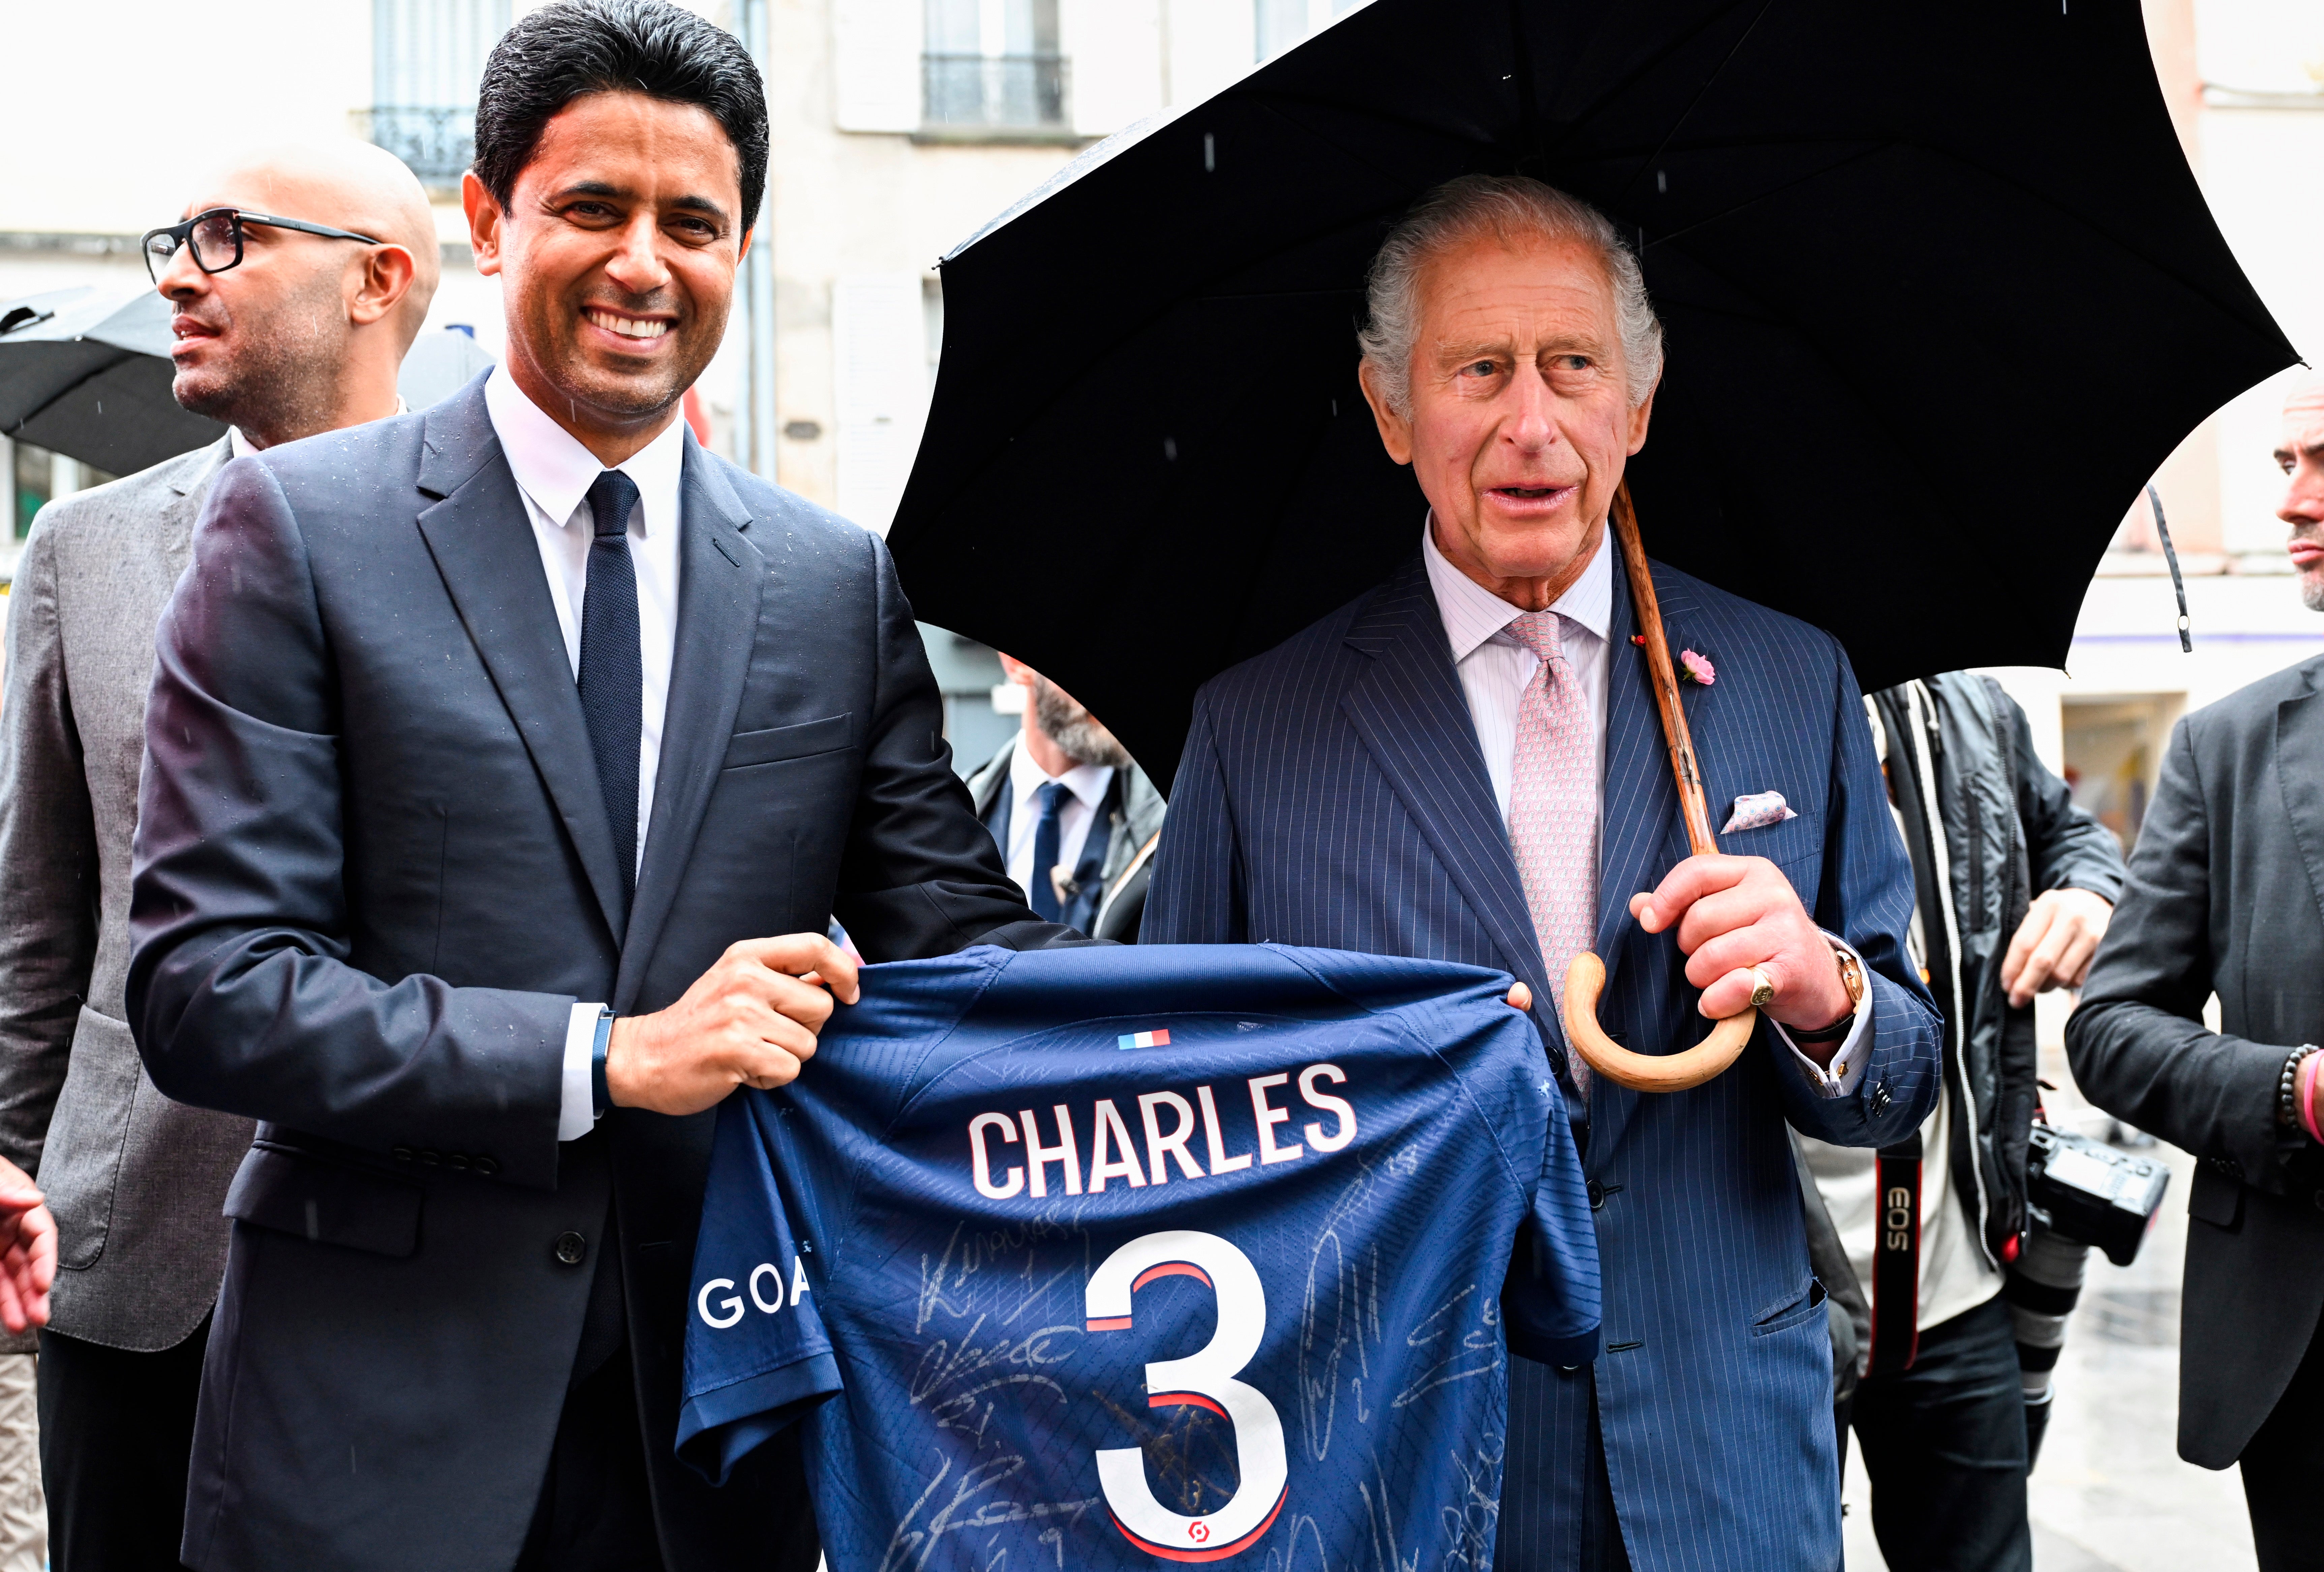 Paris Saint Germain's president Nasser Al-Khelaifi offers Charles a PSG jersey on Thursday in Saint-Denis